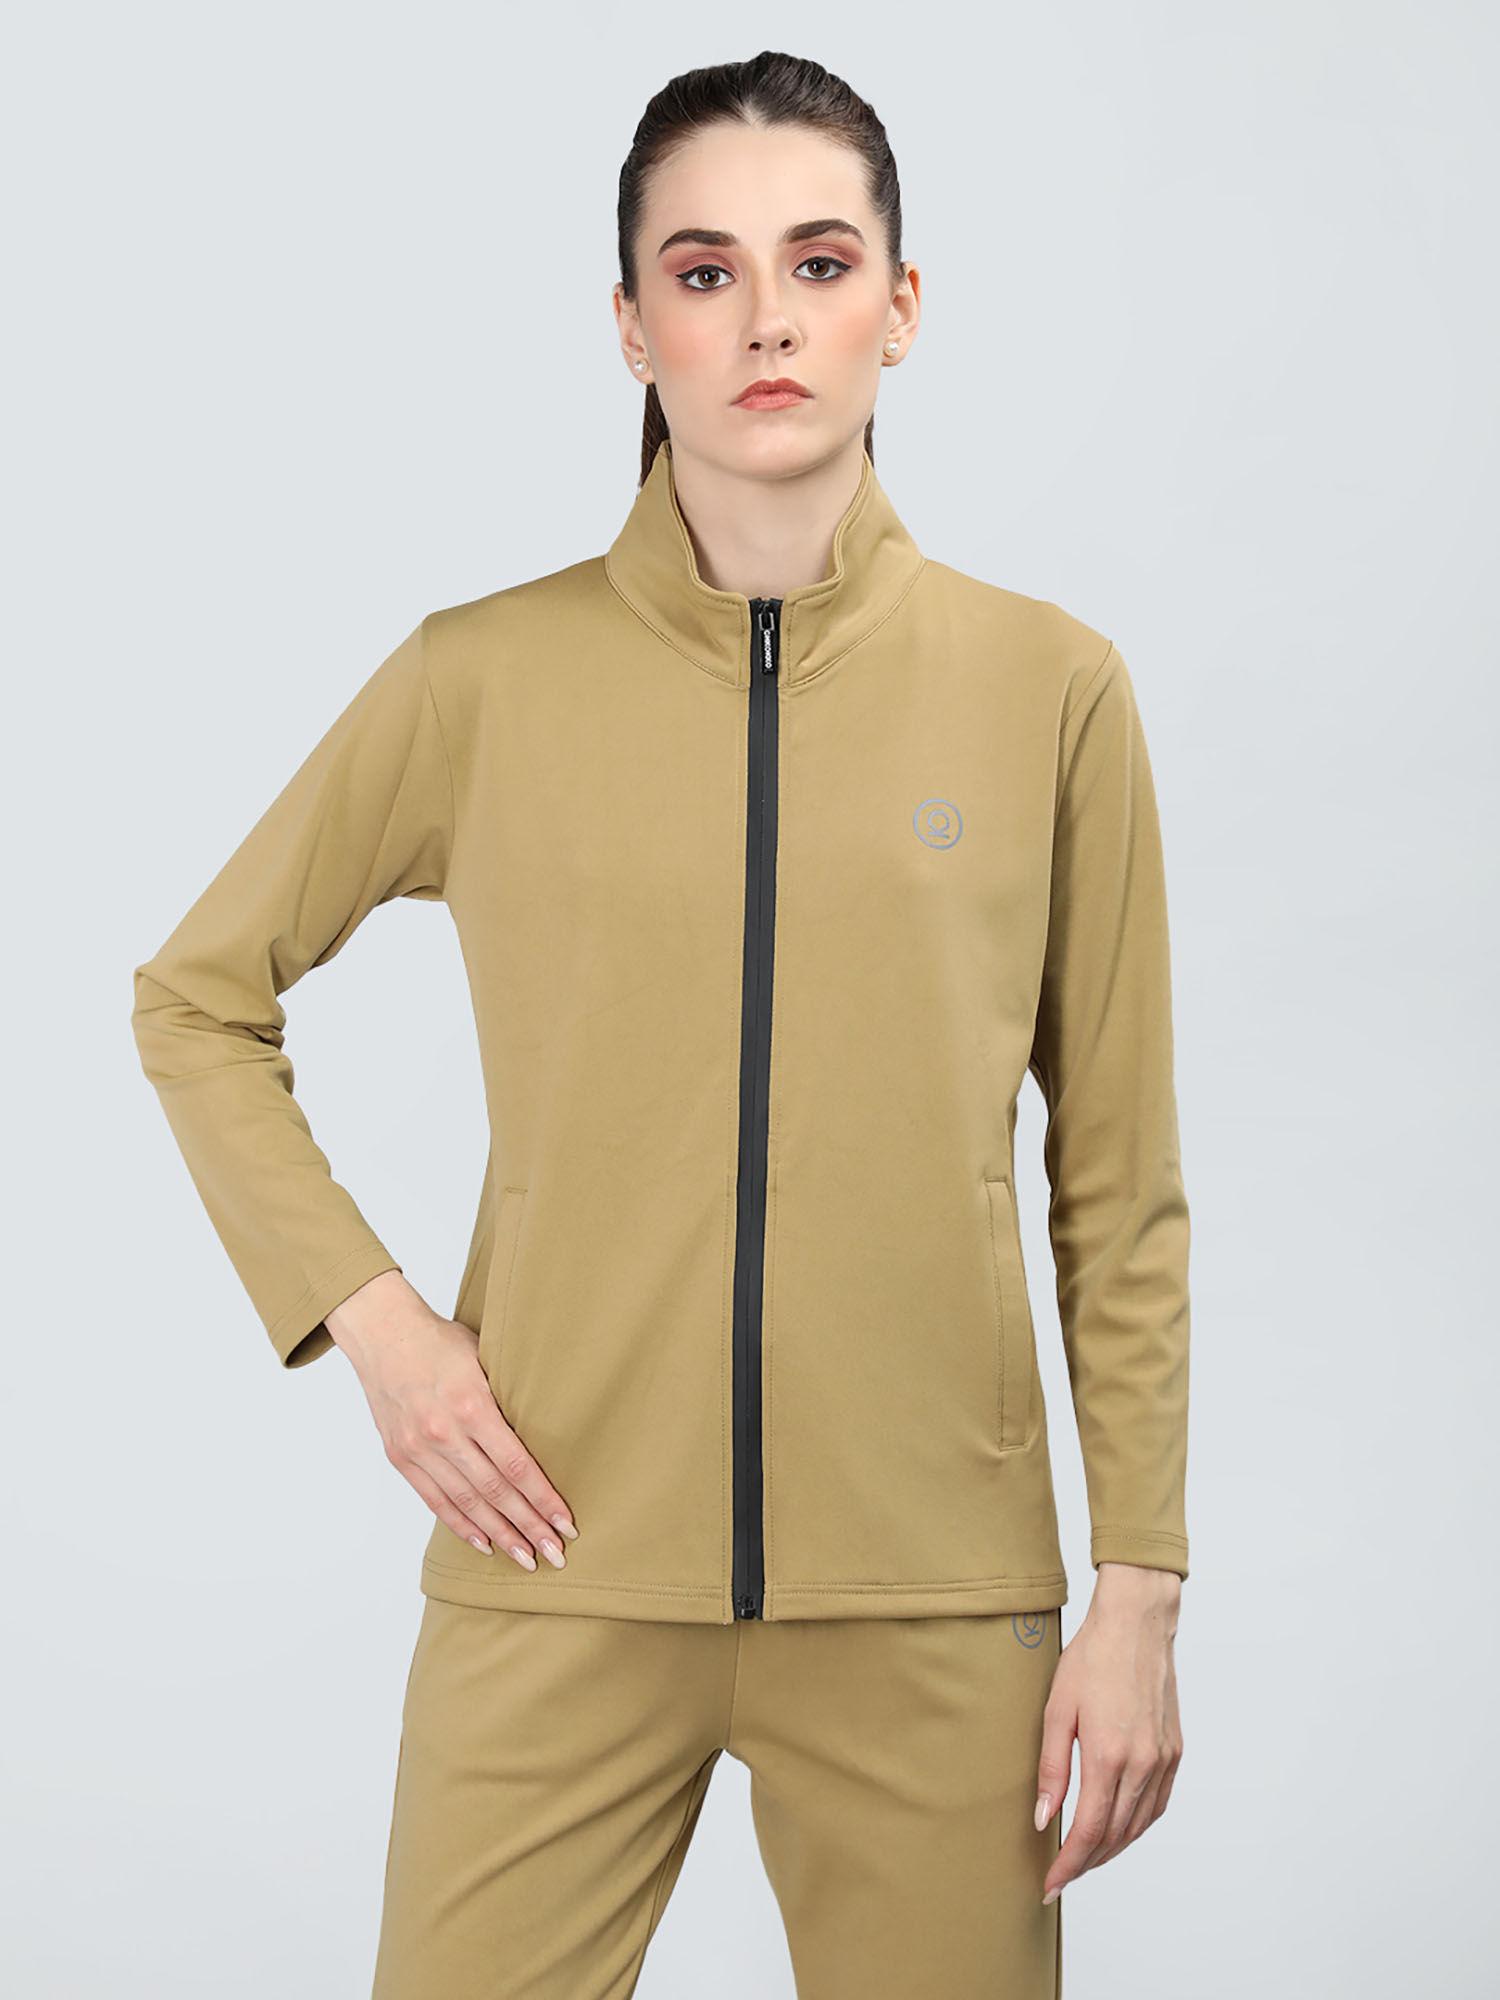 women-winter-sports-zipper-stylish-jacket-brown